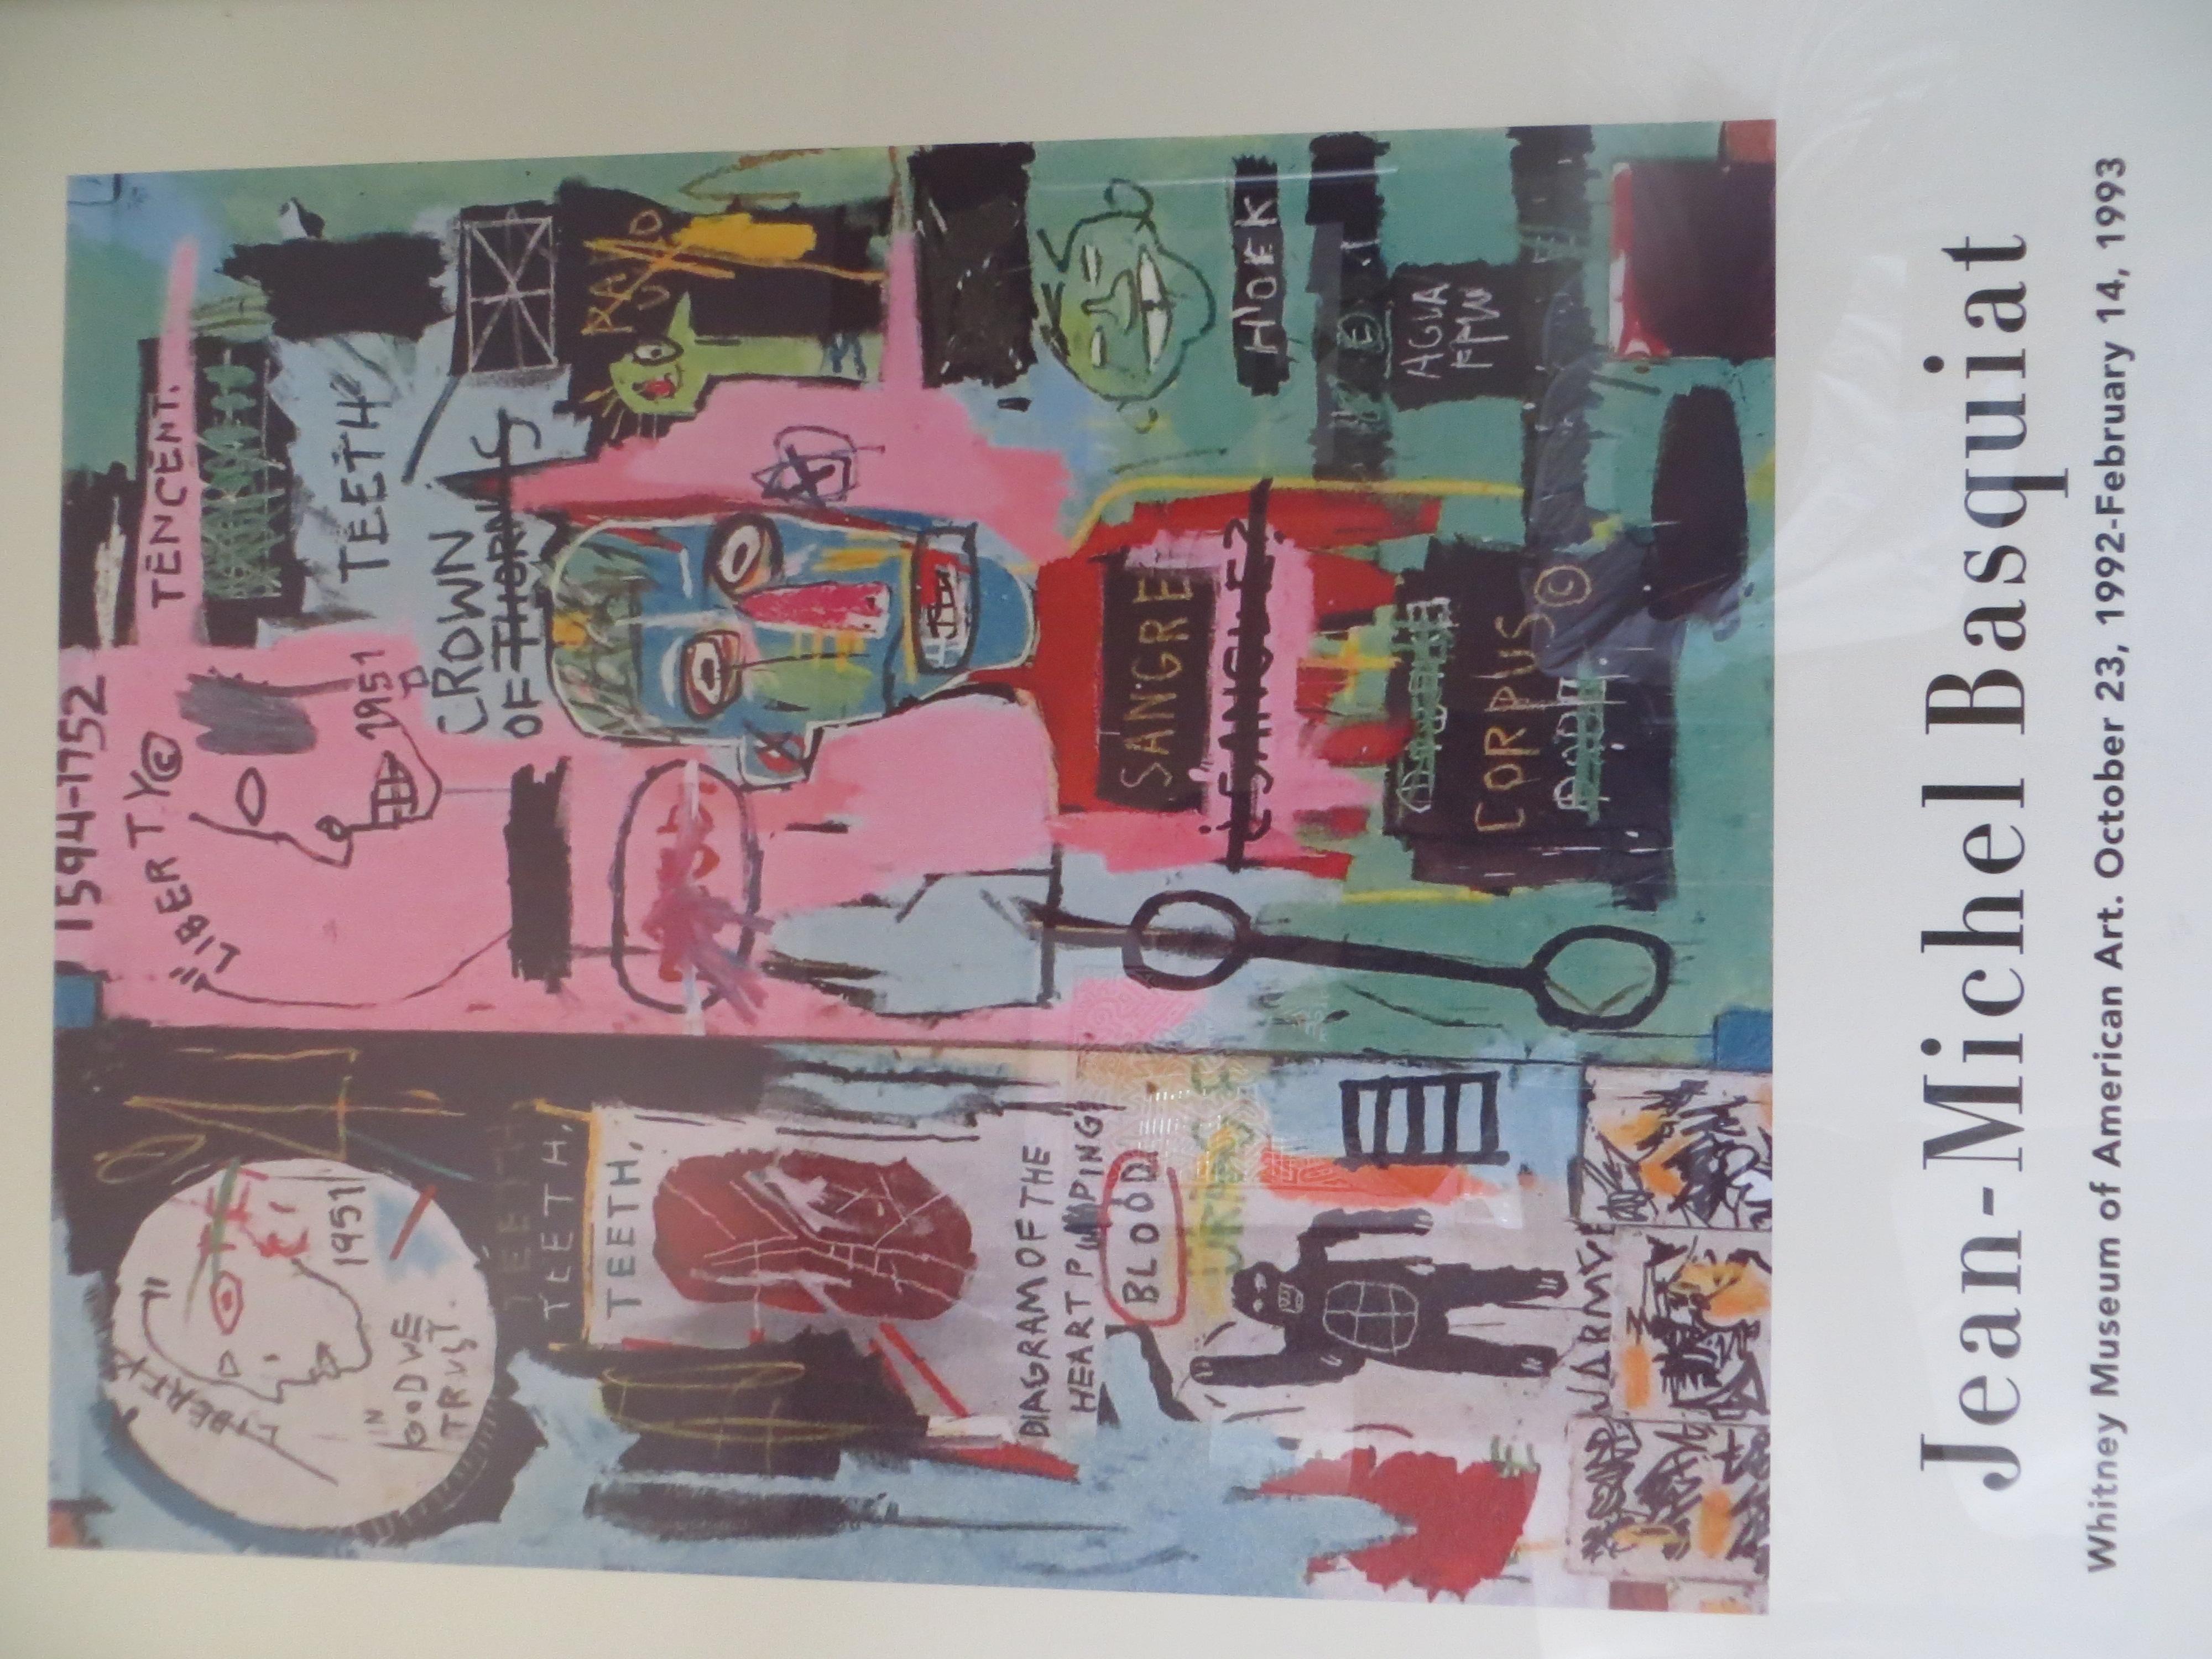  Jean-Michel Basquiat  Exhibition Poster - Print by (after) Jean-Michel Basquiat